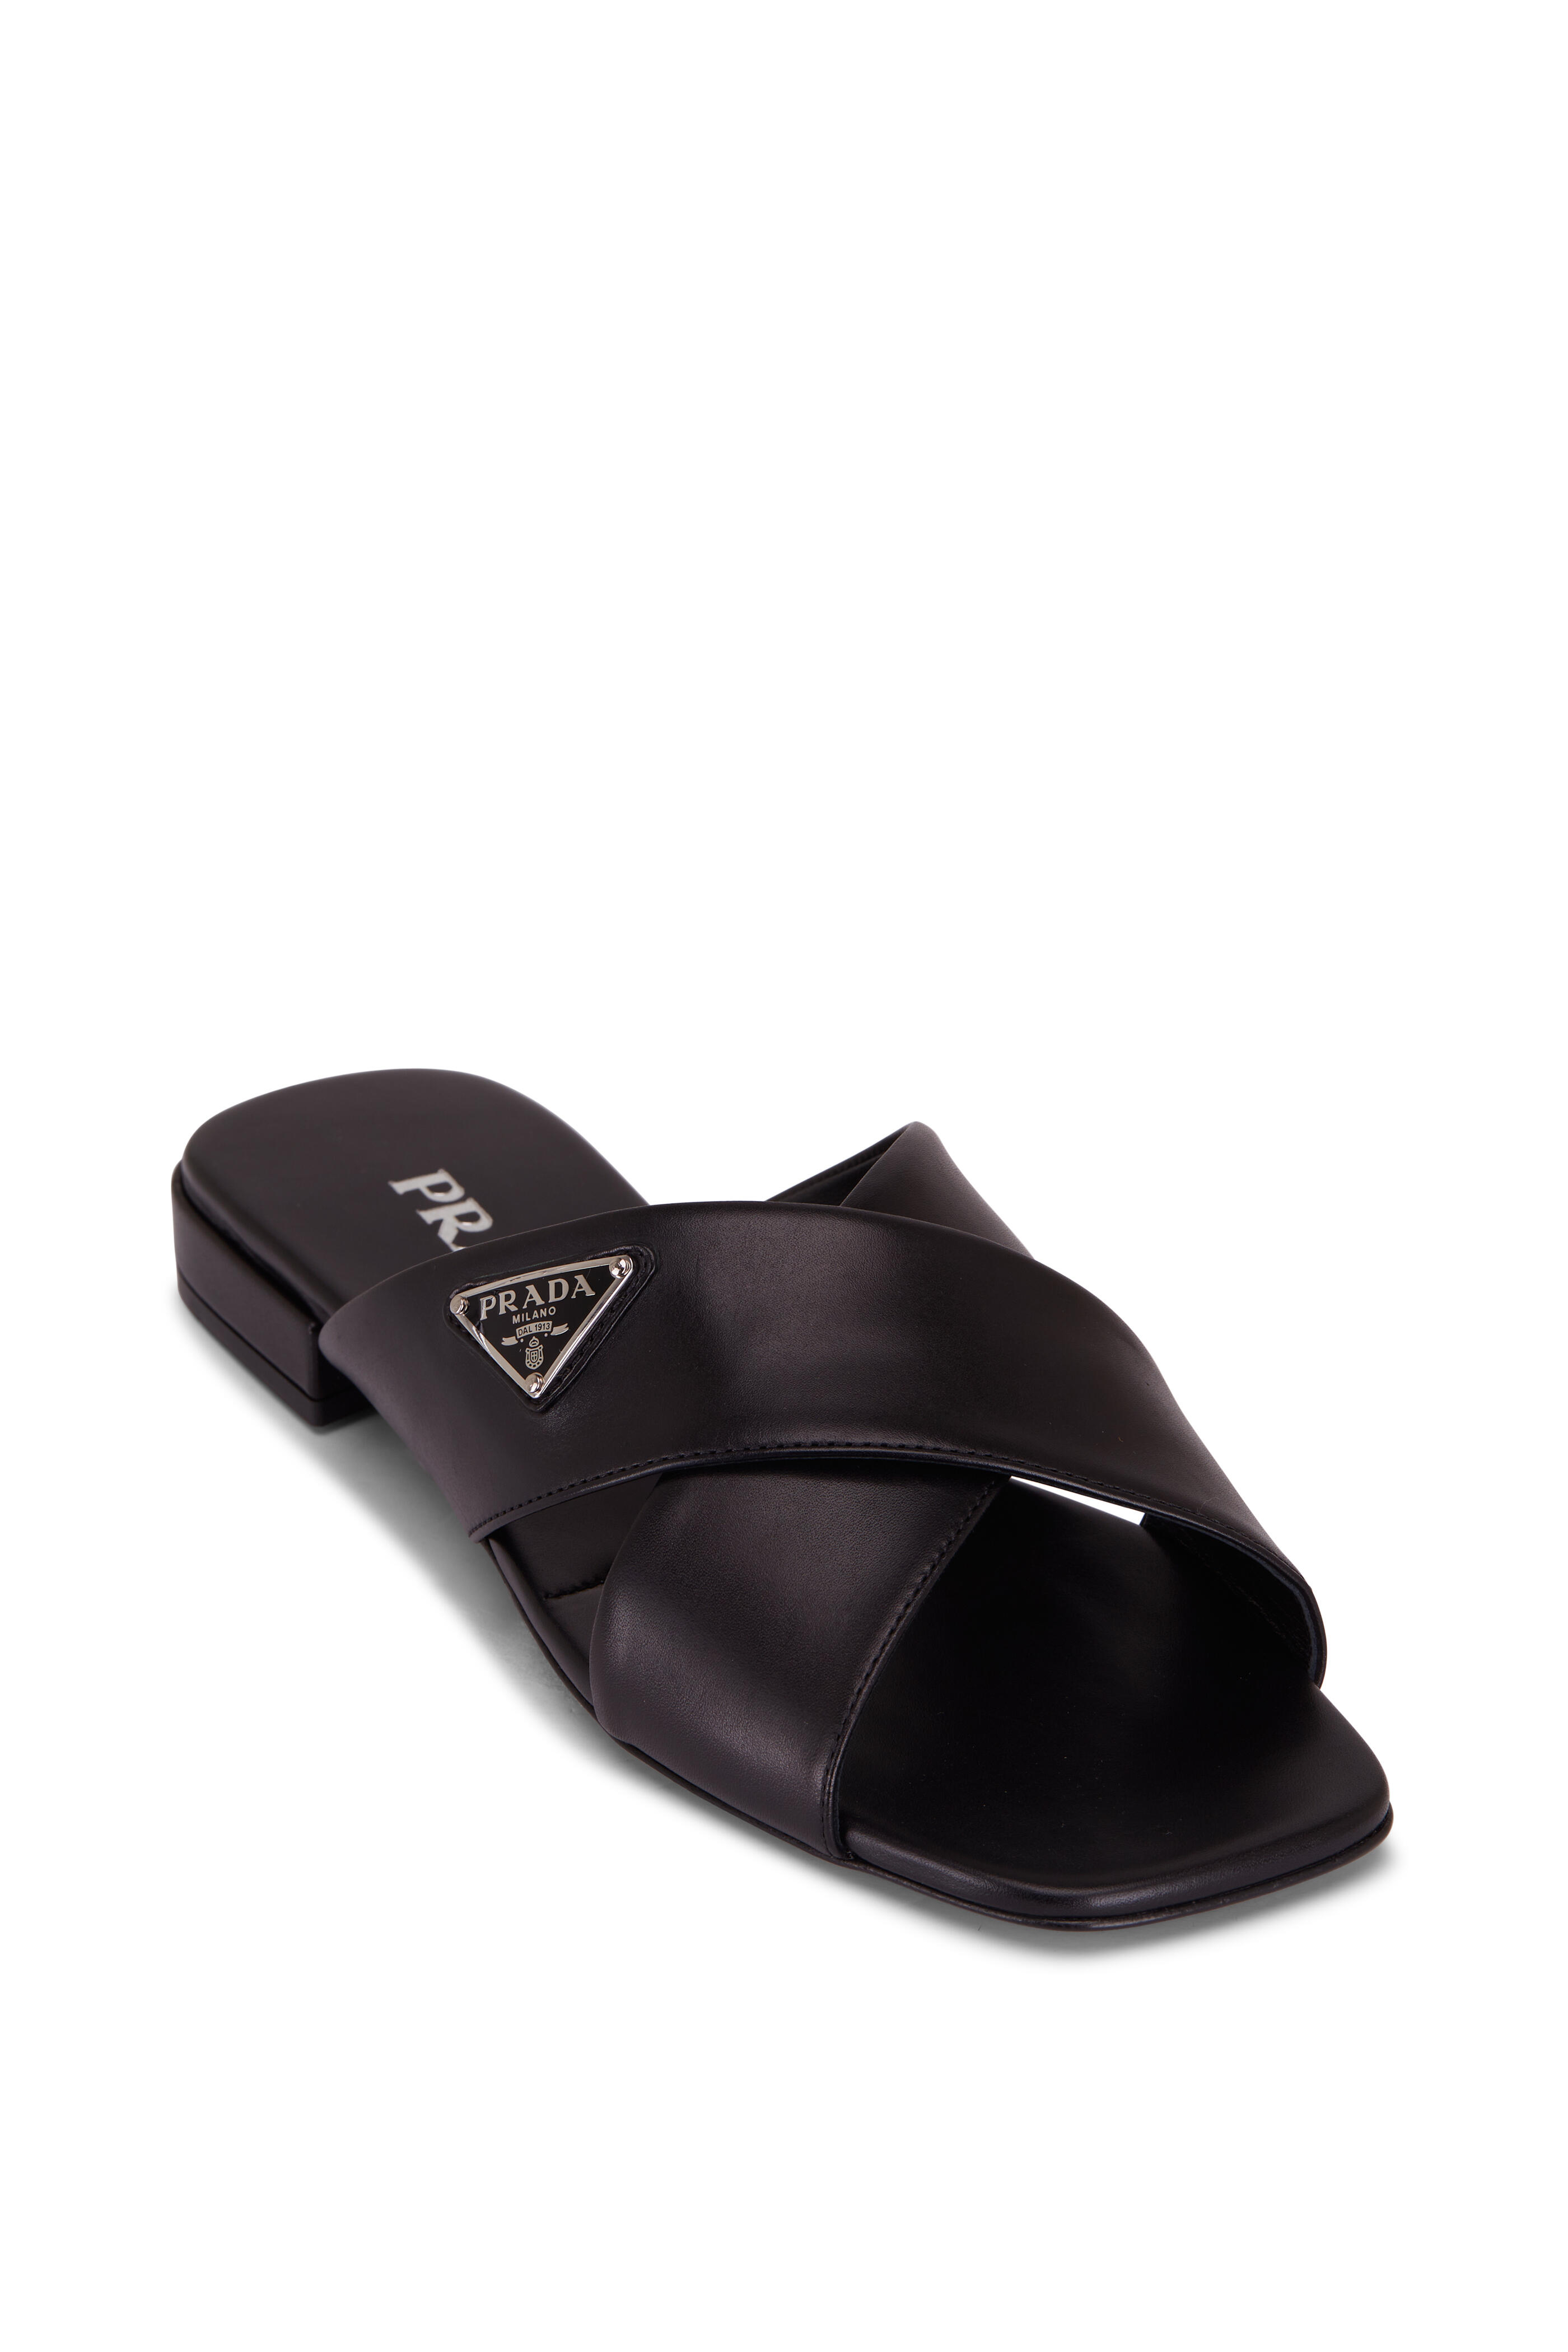 Prada - Black Leather Criss Cross Flat Sandal | Mitchell Stores